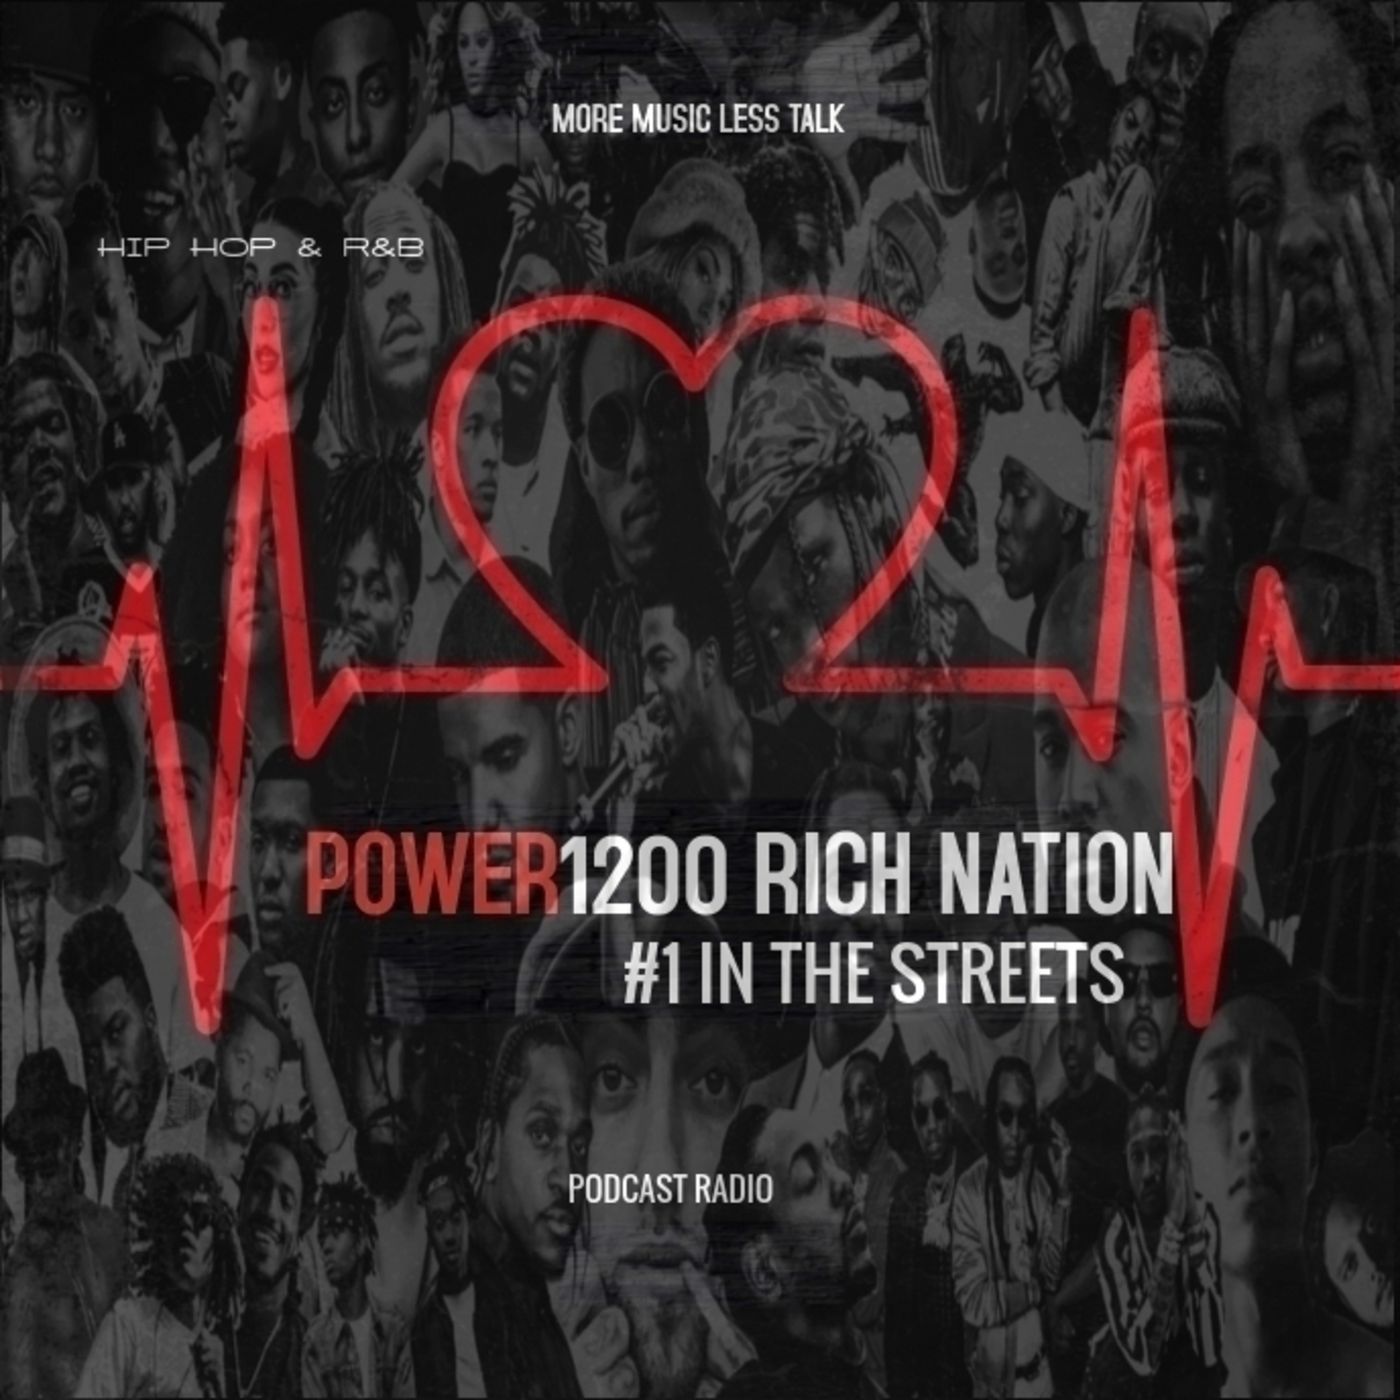 Power.1200 Rich Nation Podcast Radio